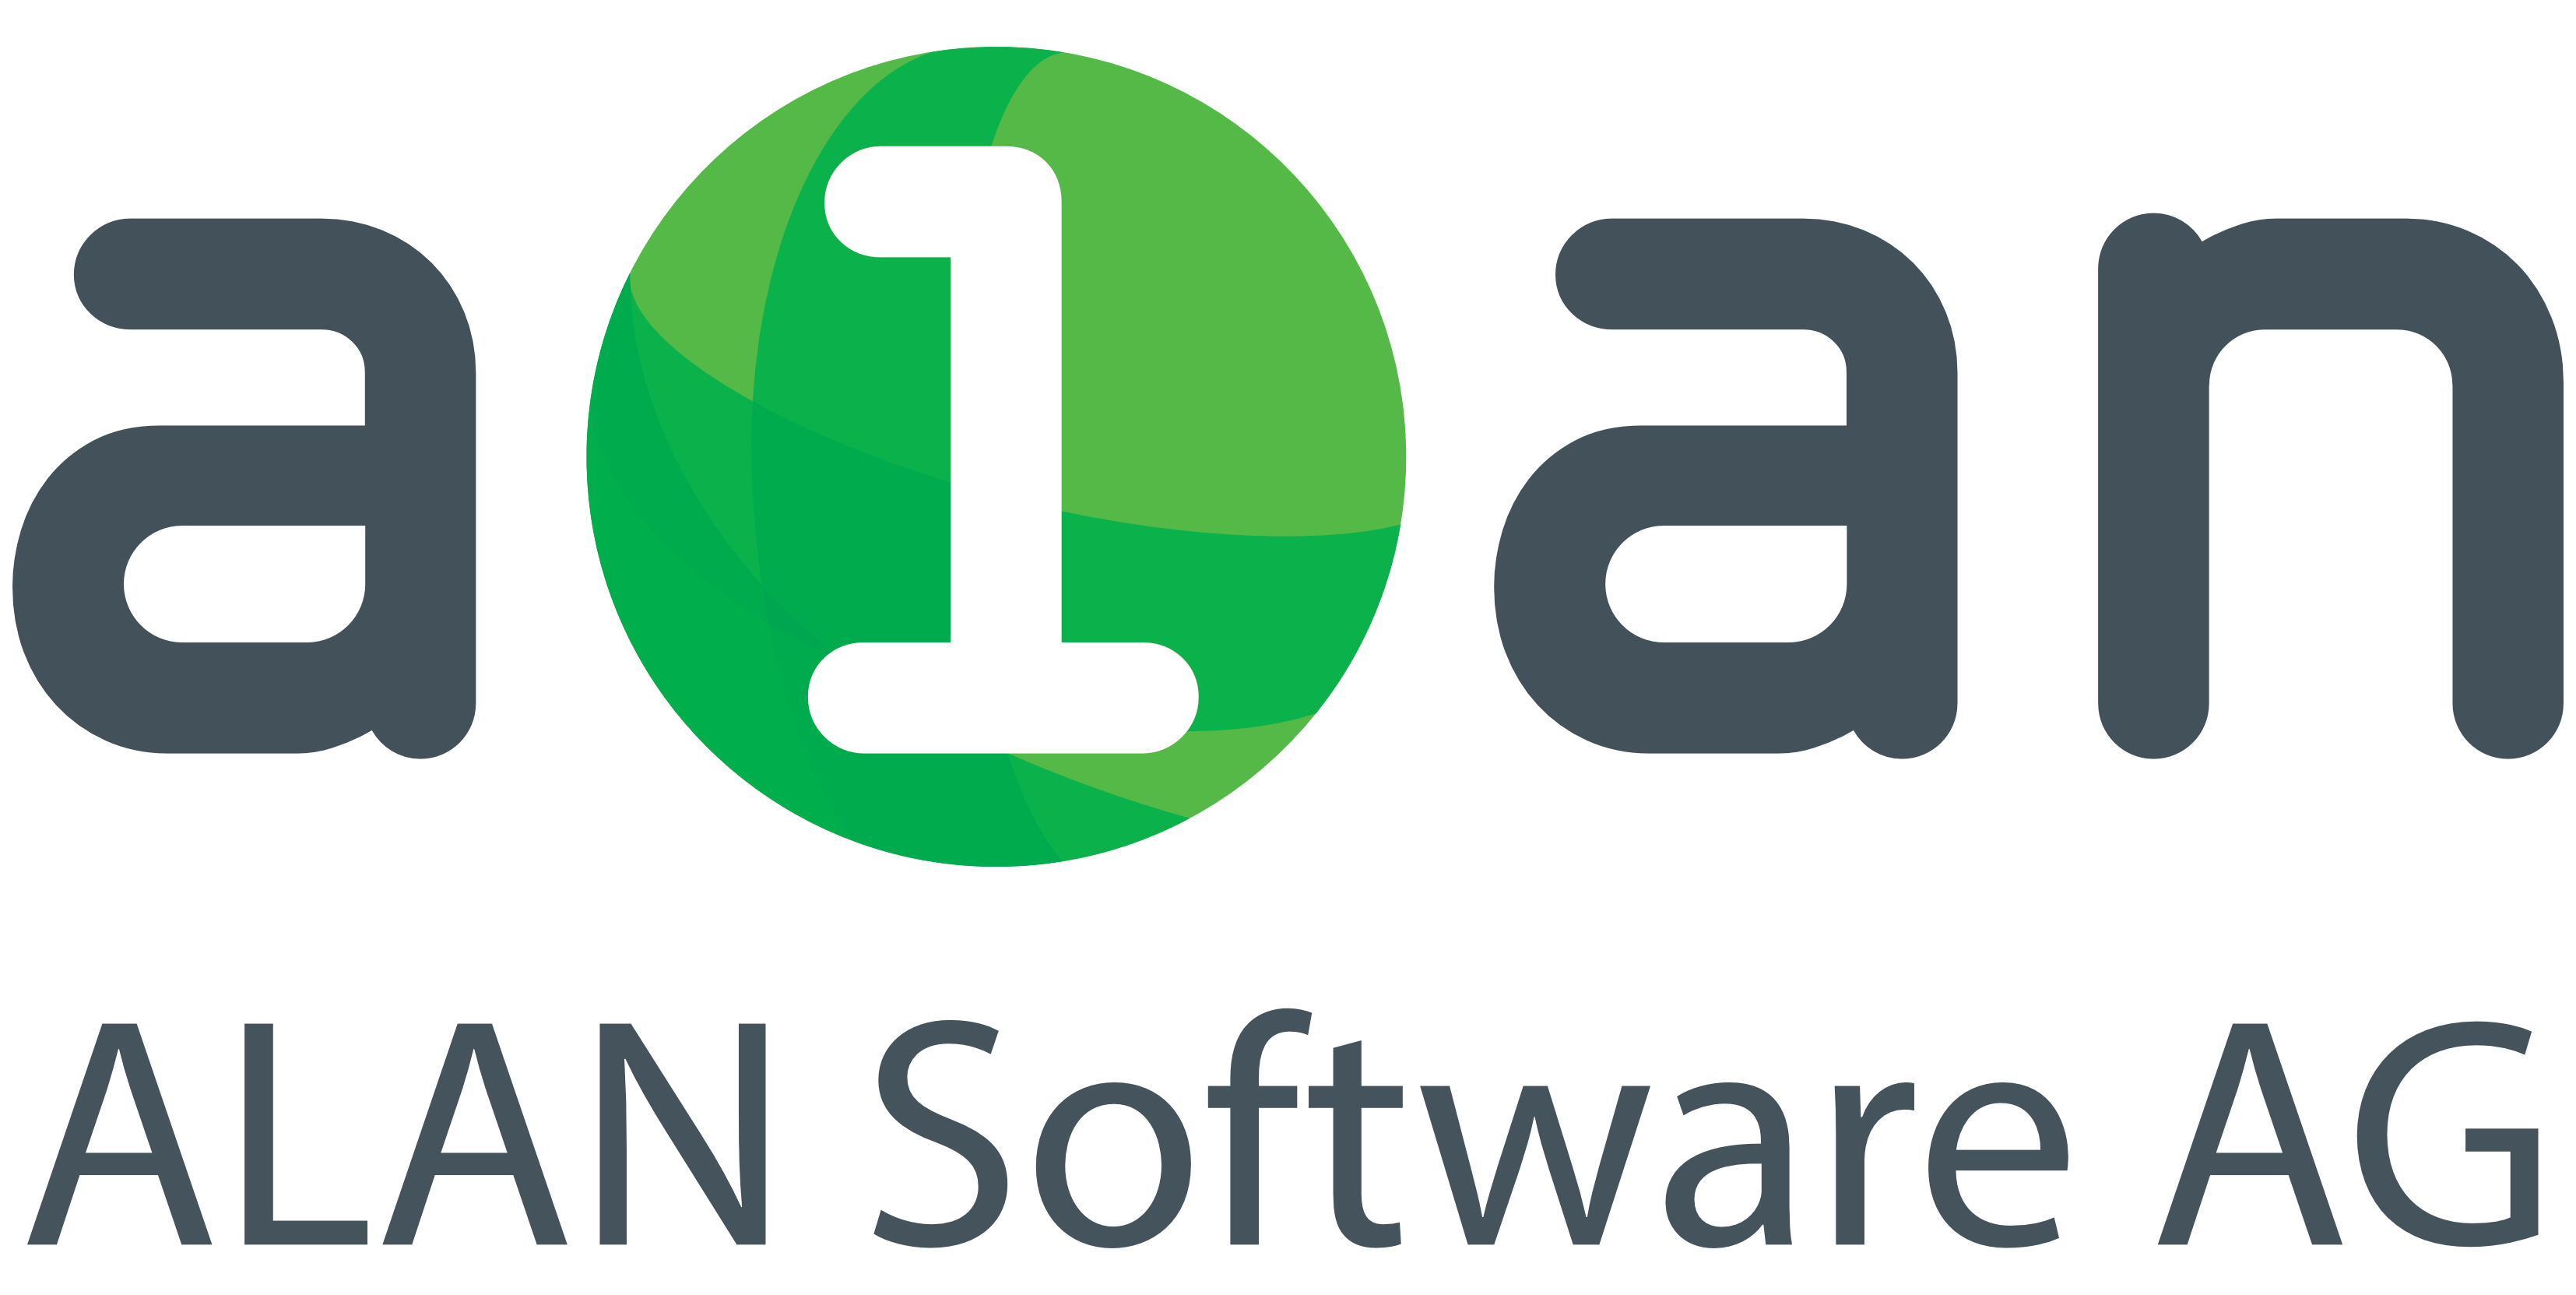 ALAN Software AG